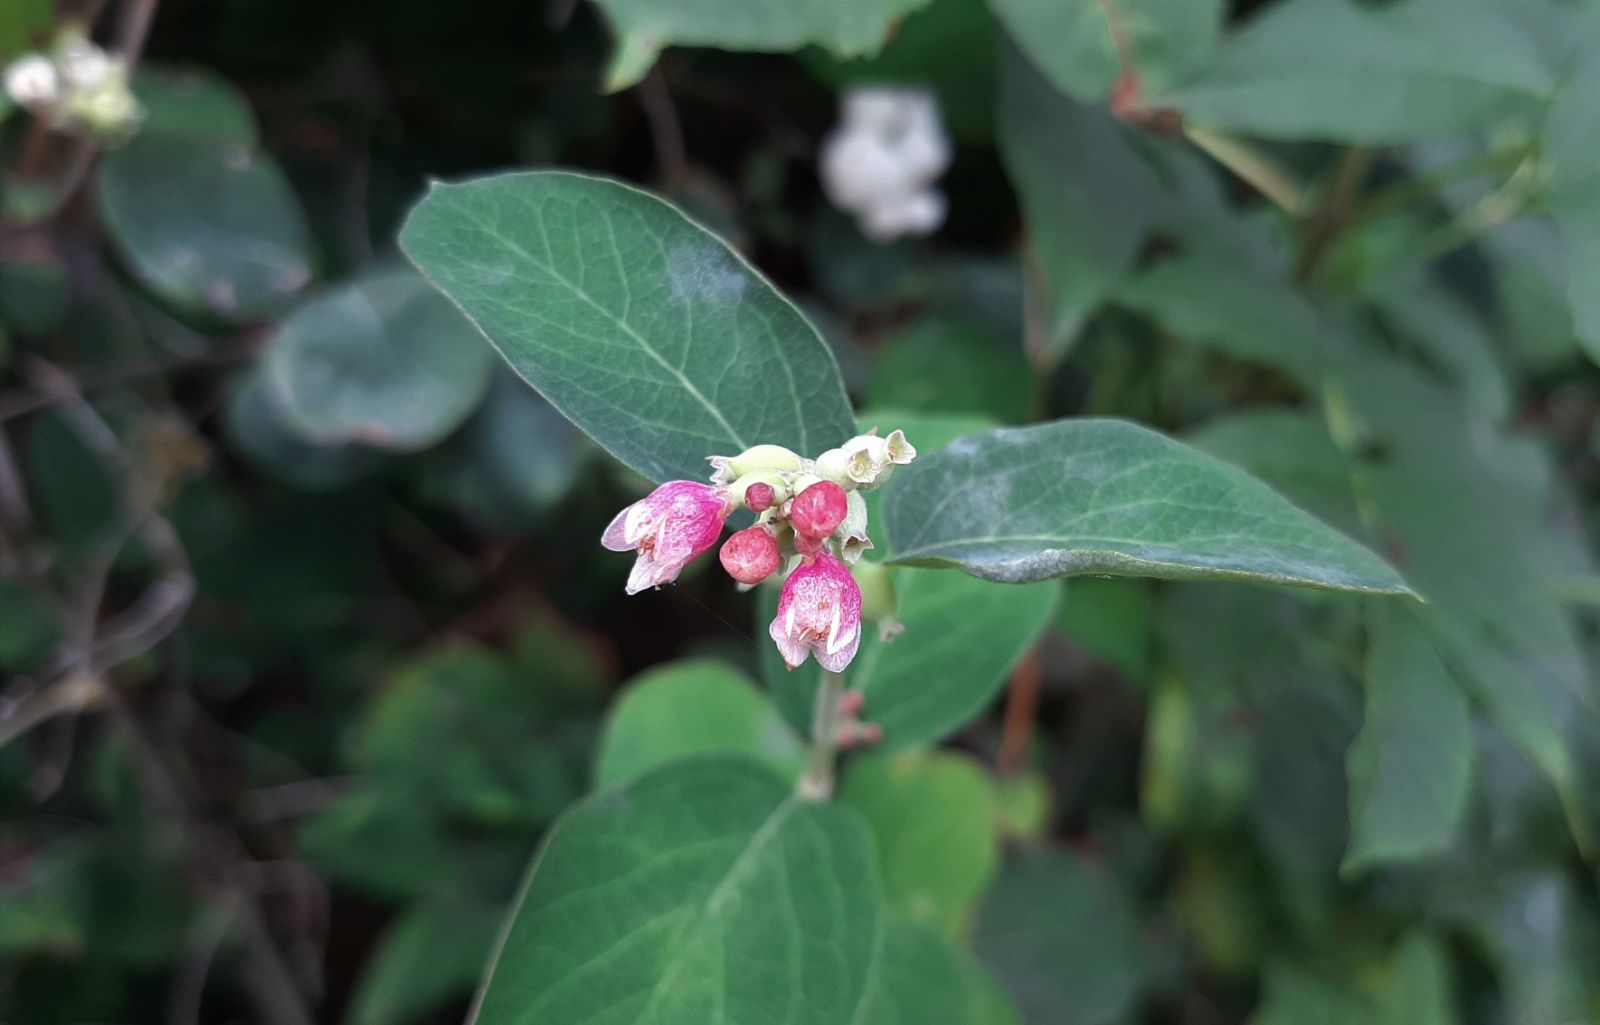 25 COMMON SNOWBERRY - WHITE Berries Pink Flowers Symphoricarpos Alba Shrub  Seeds